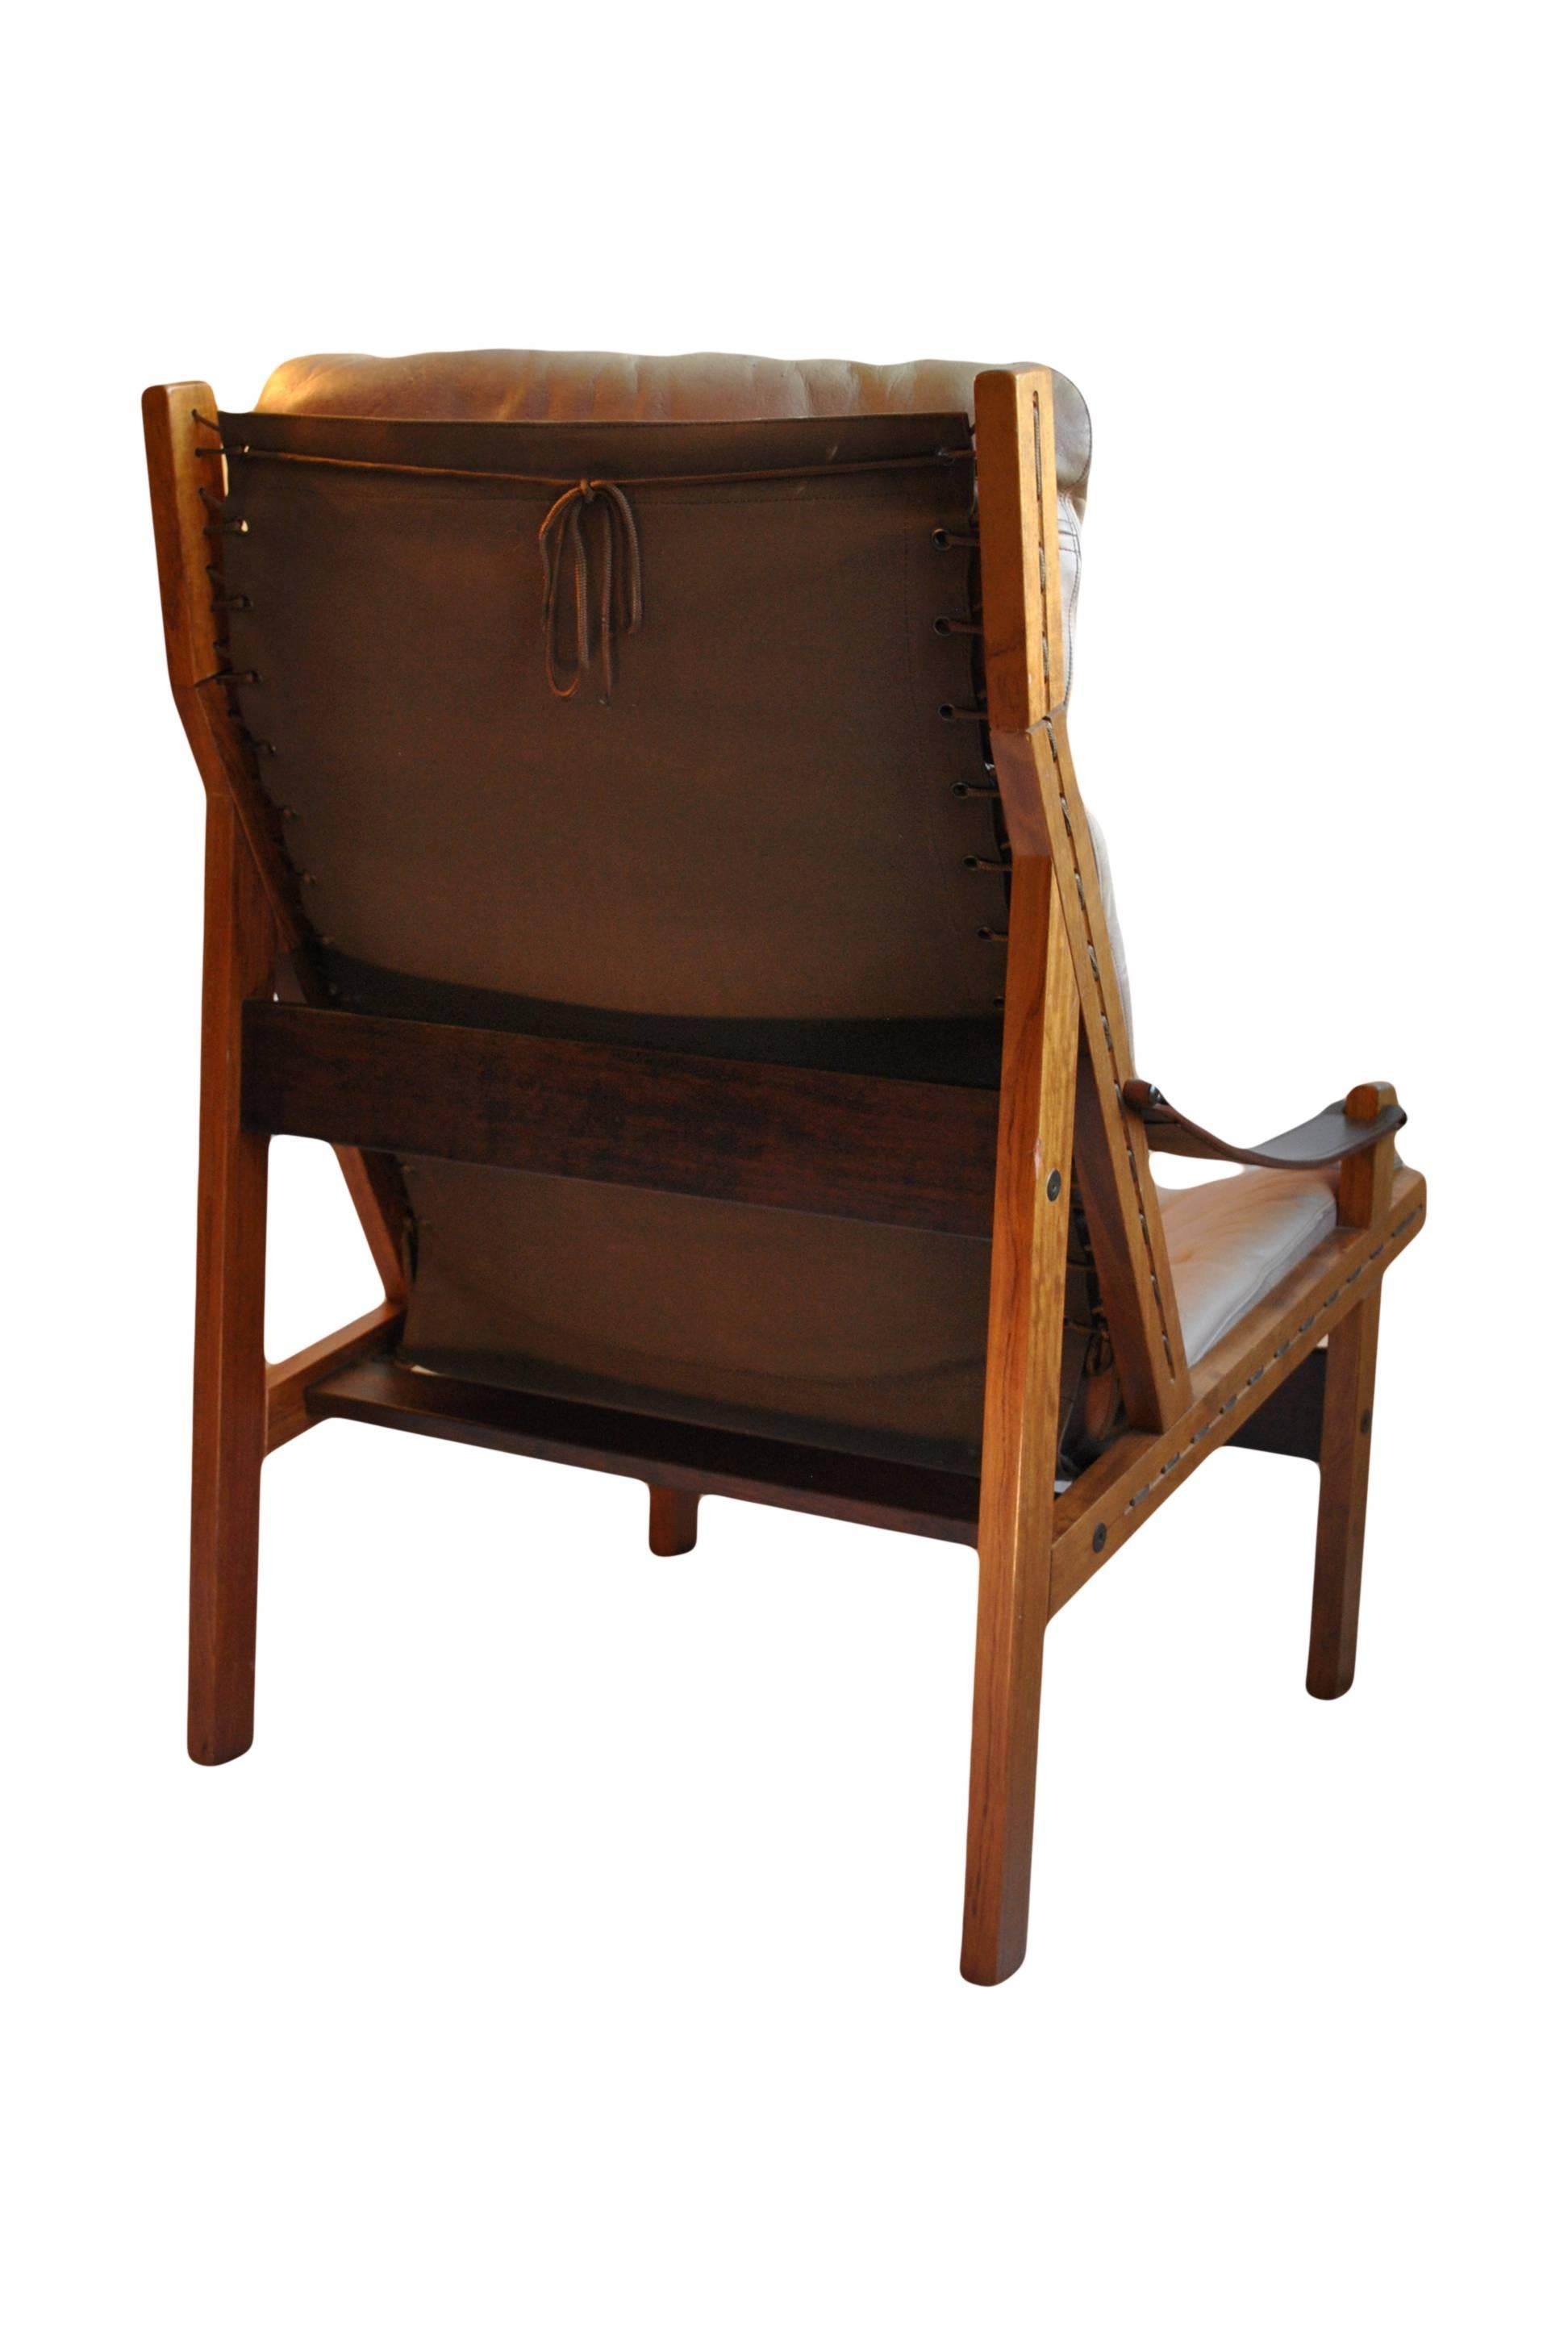 torbjorn afdal chair